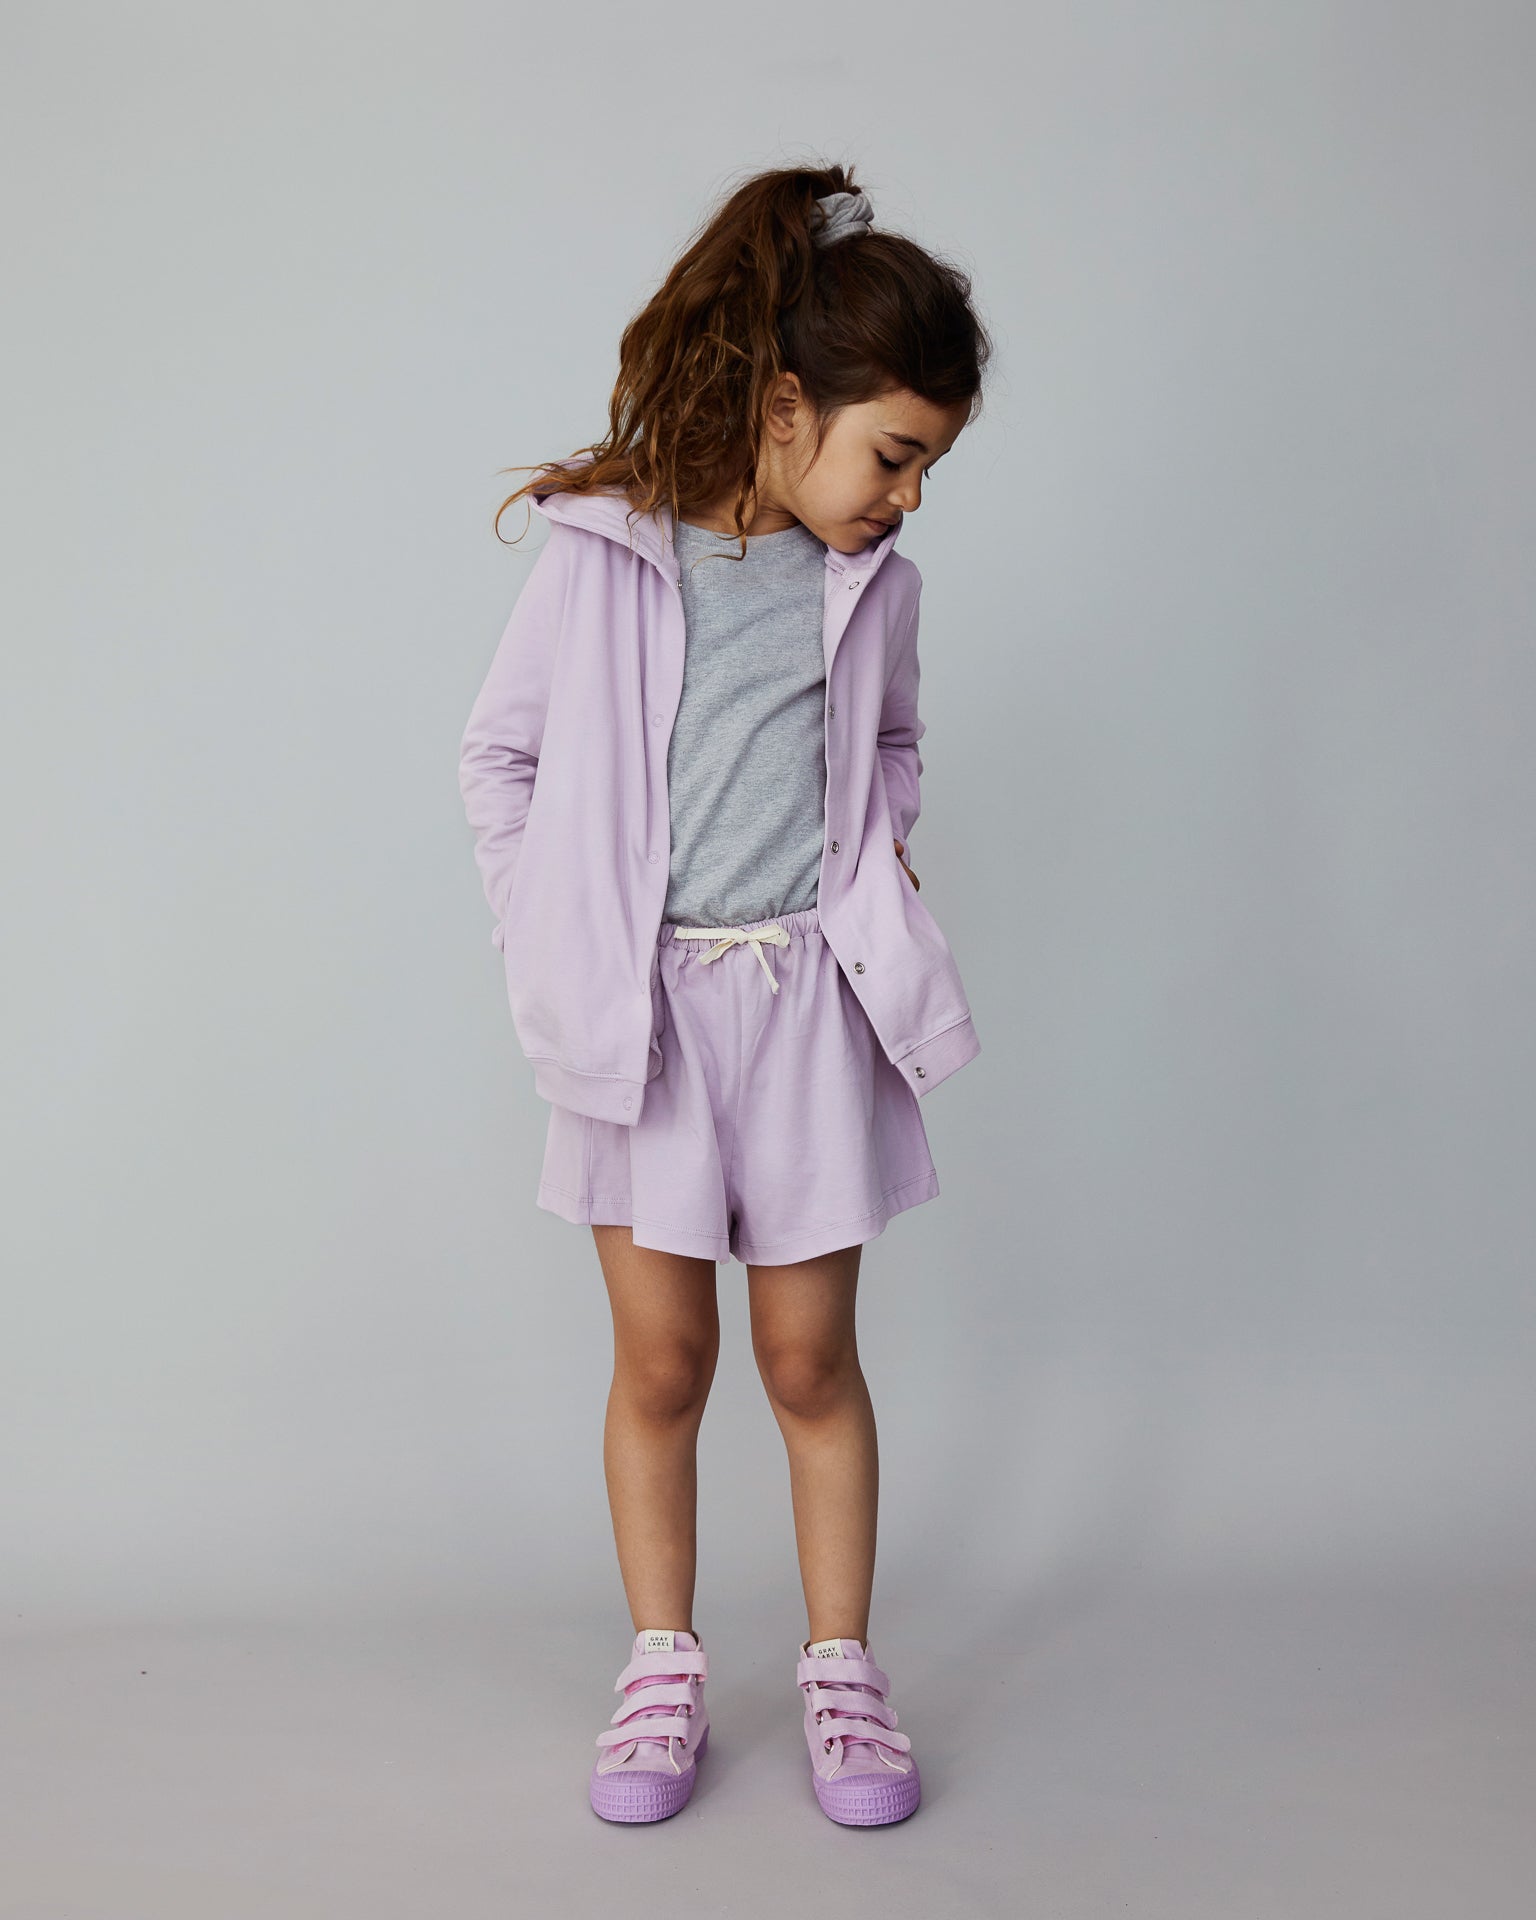 Little gray label girl oversized shorts in purple haze